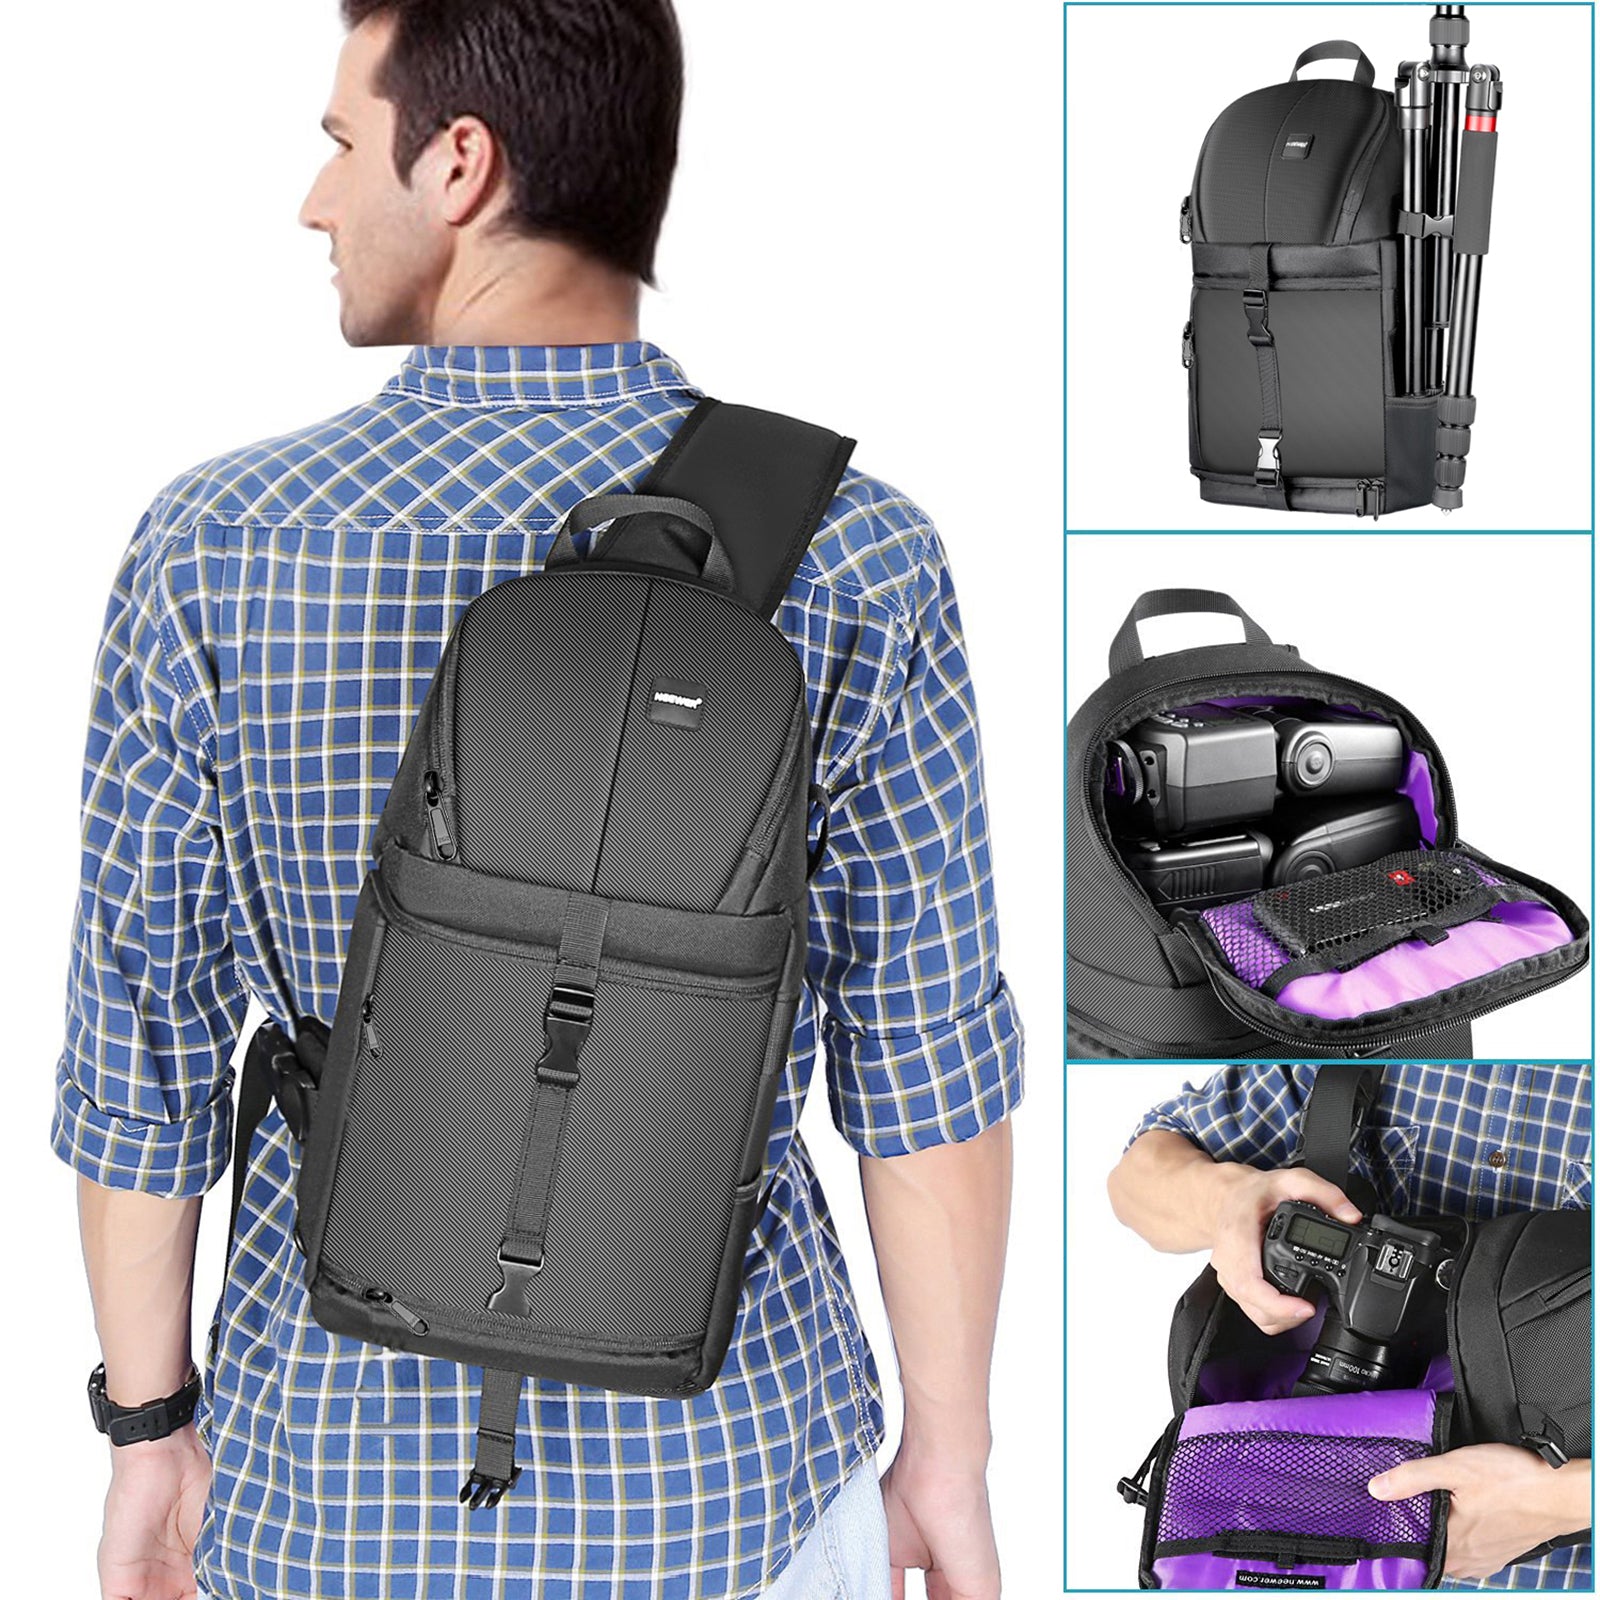 NEEWER SR005 2 Pack Backpack Strap Pads - NEEWER